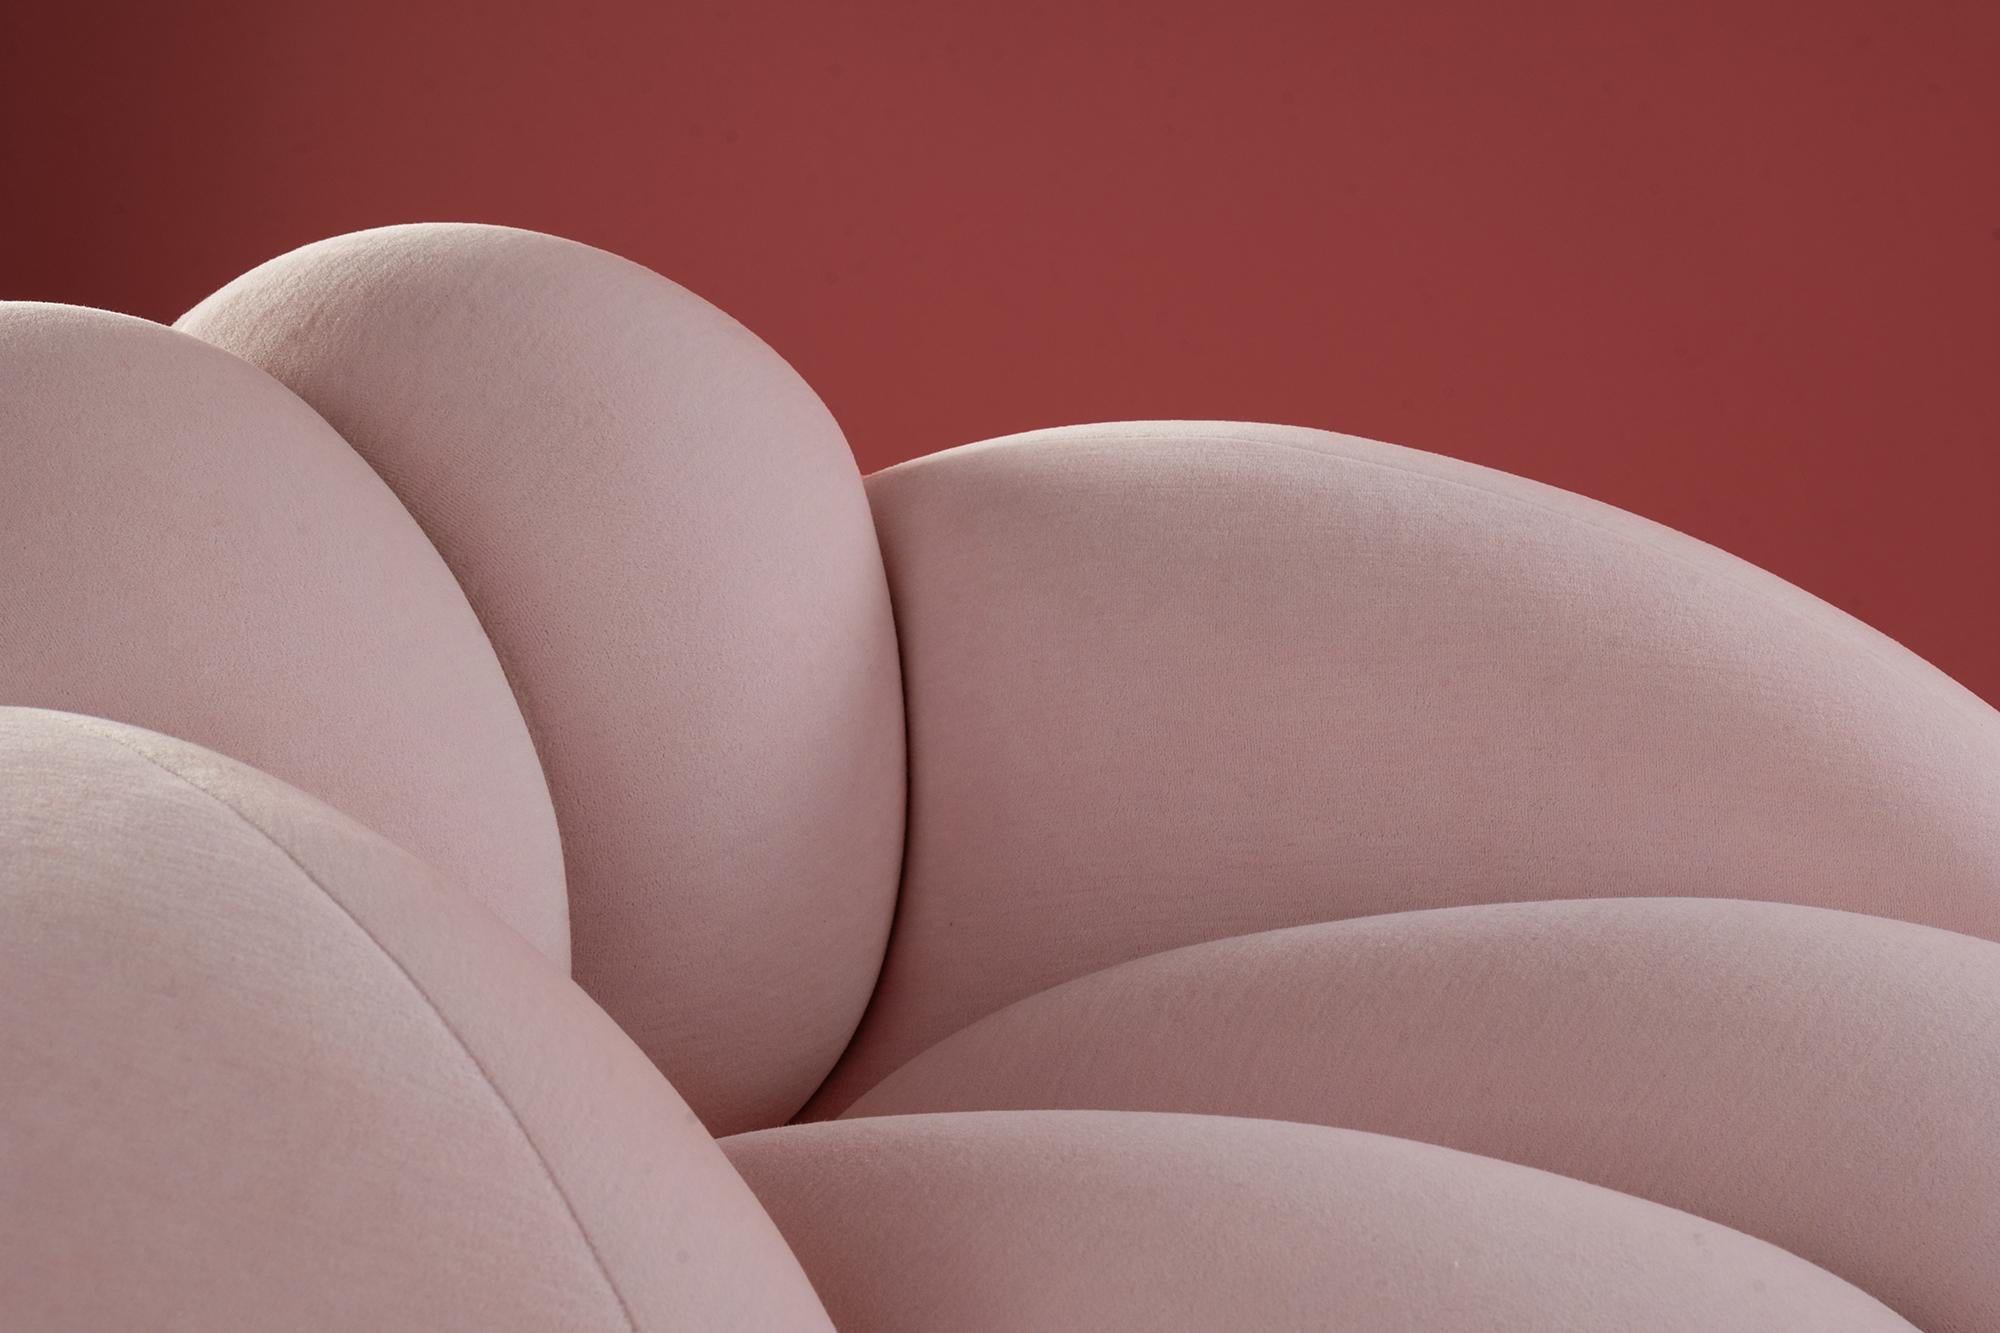 Wool Derrière Chair by Lara Bohinc, Orange Velvet Fabric, Organic Shape, Armchair For Sale